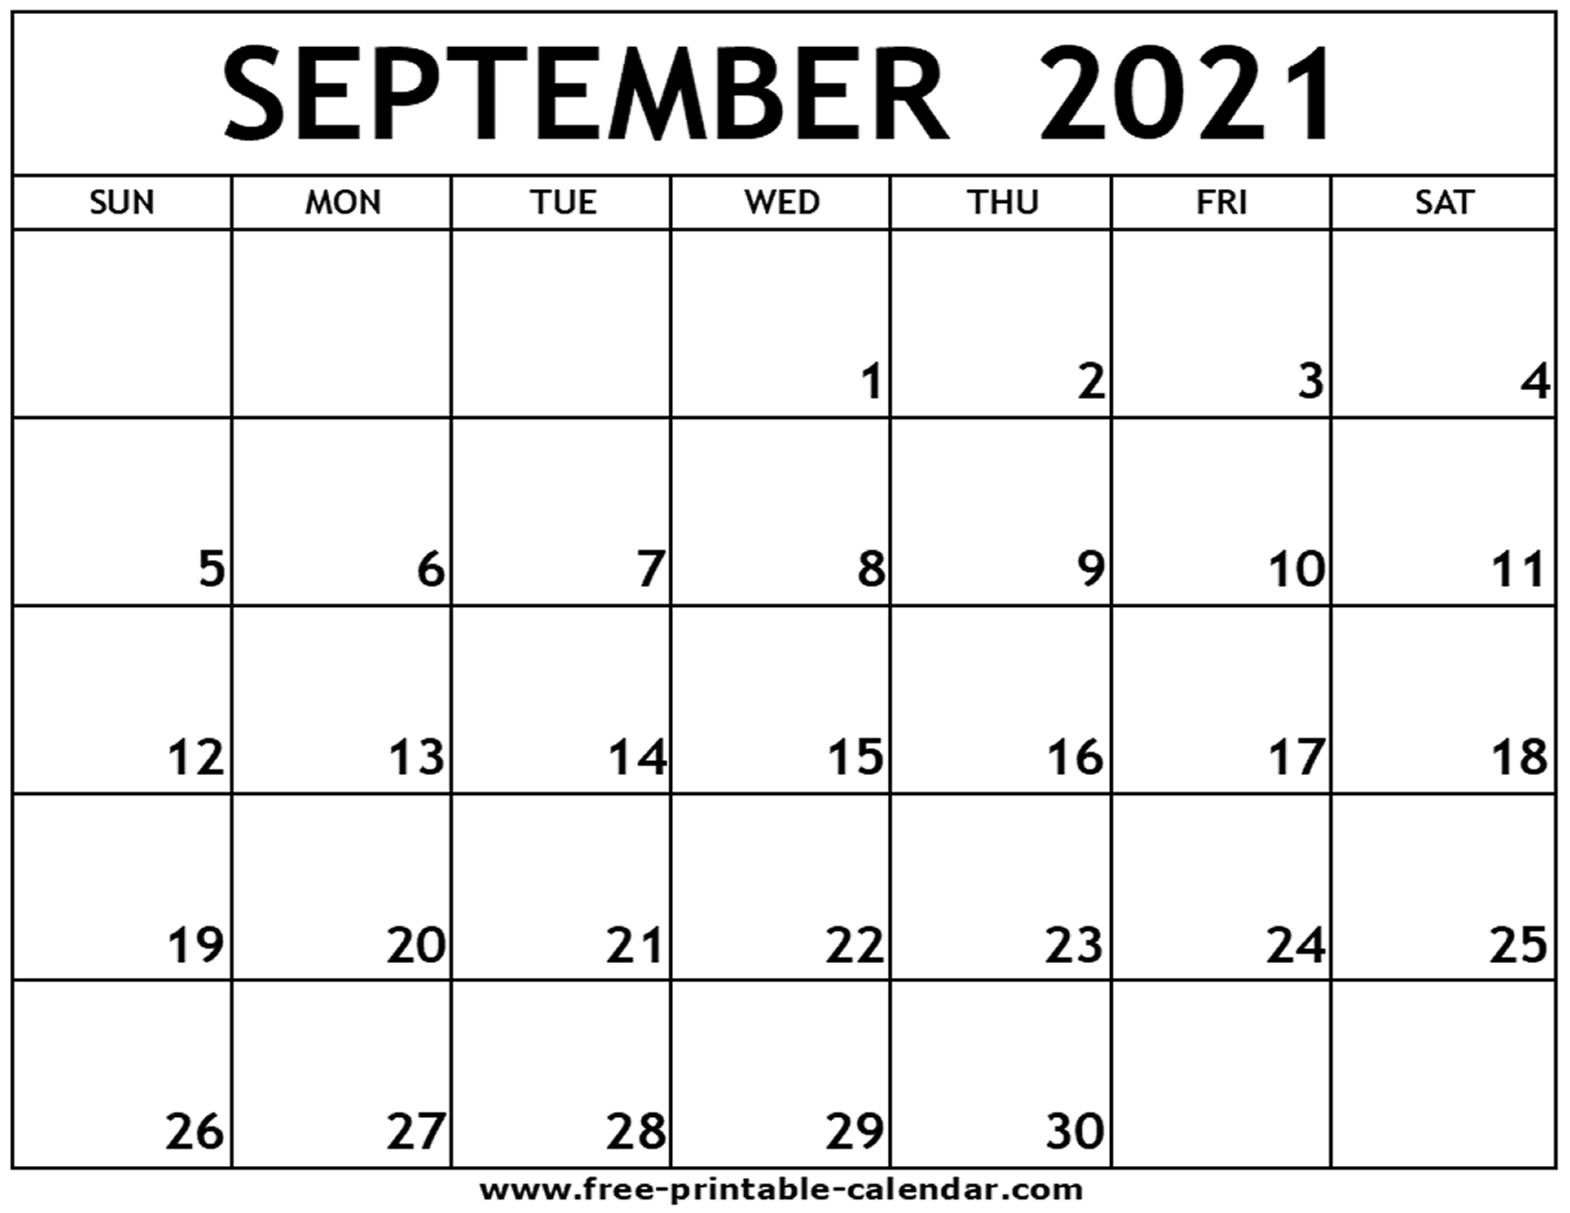 September 2021 Calendar | Free 2021 Printable Calendars Calendar Events September 2021